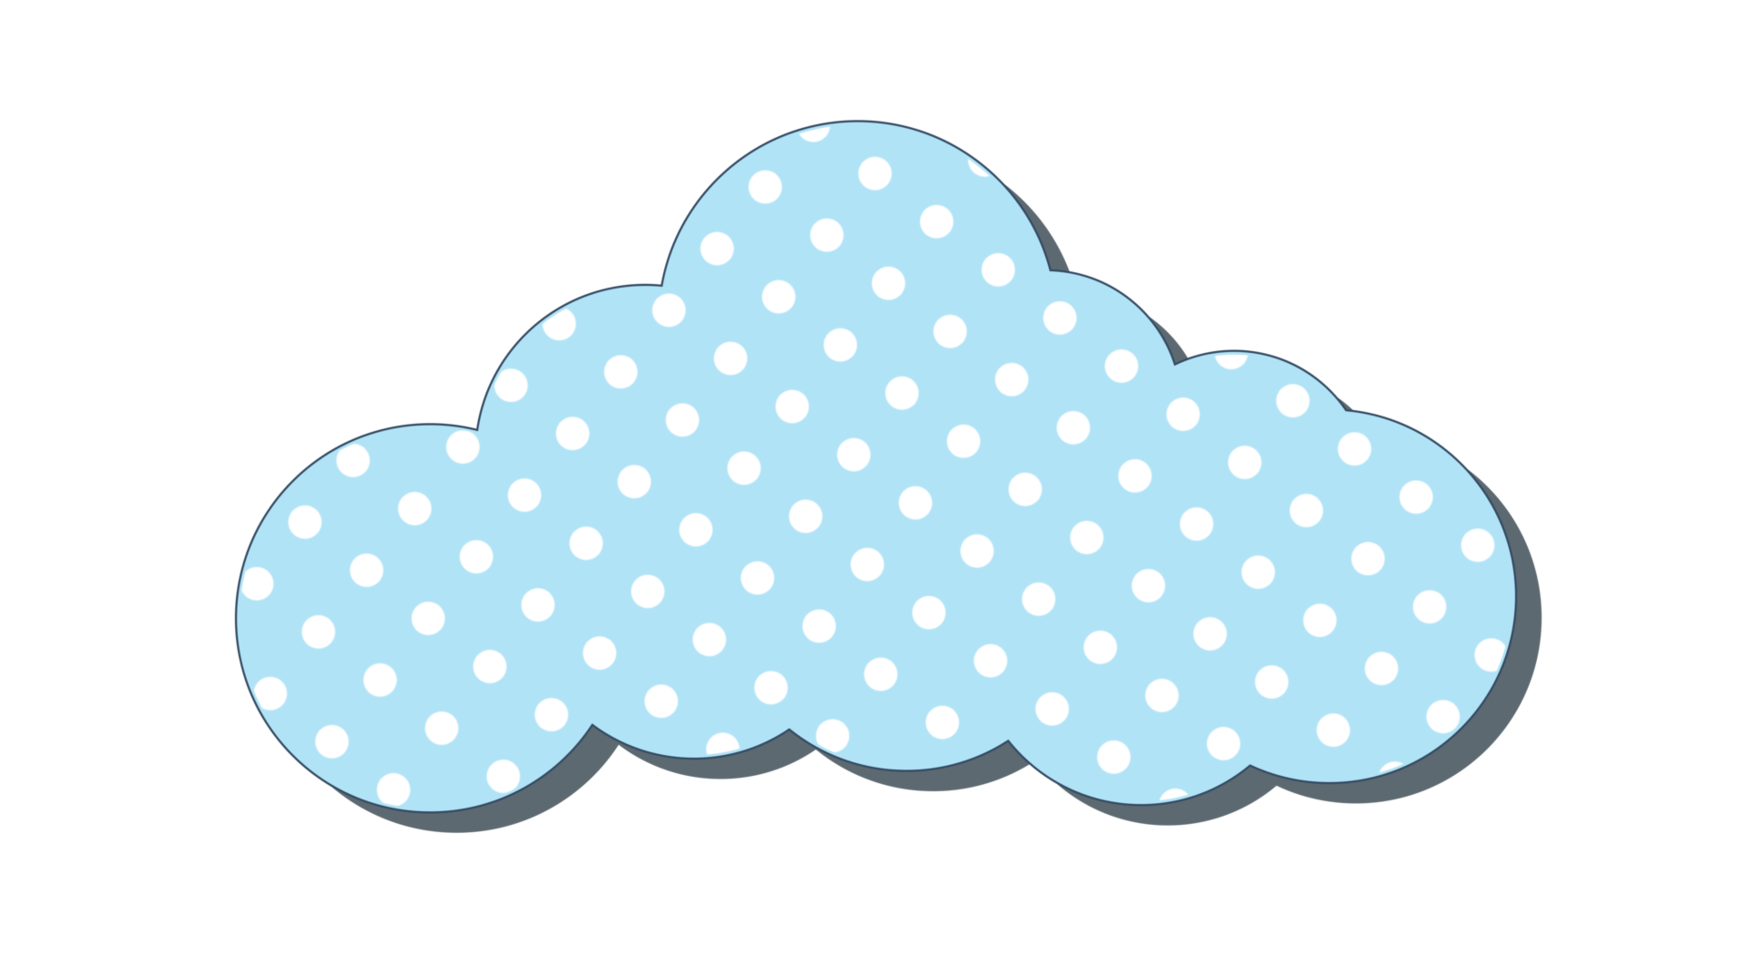 Abstract kawaii Clouds cartoon background. png